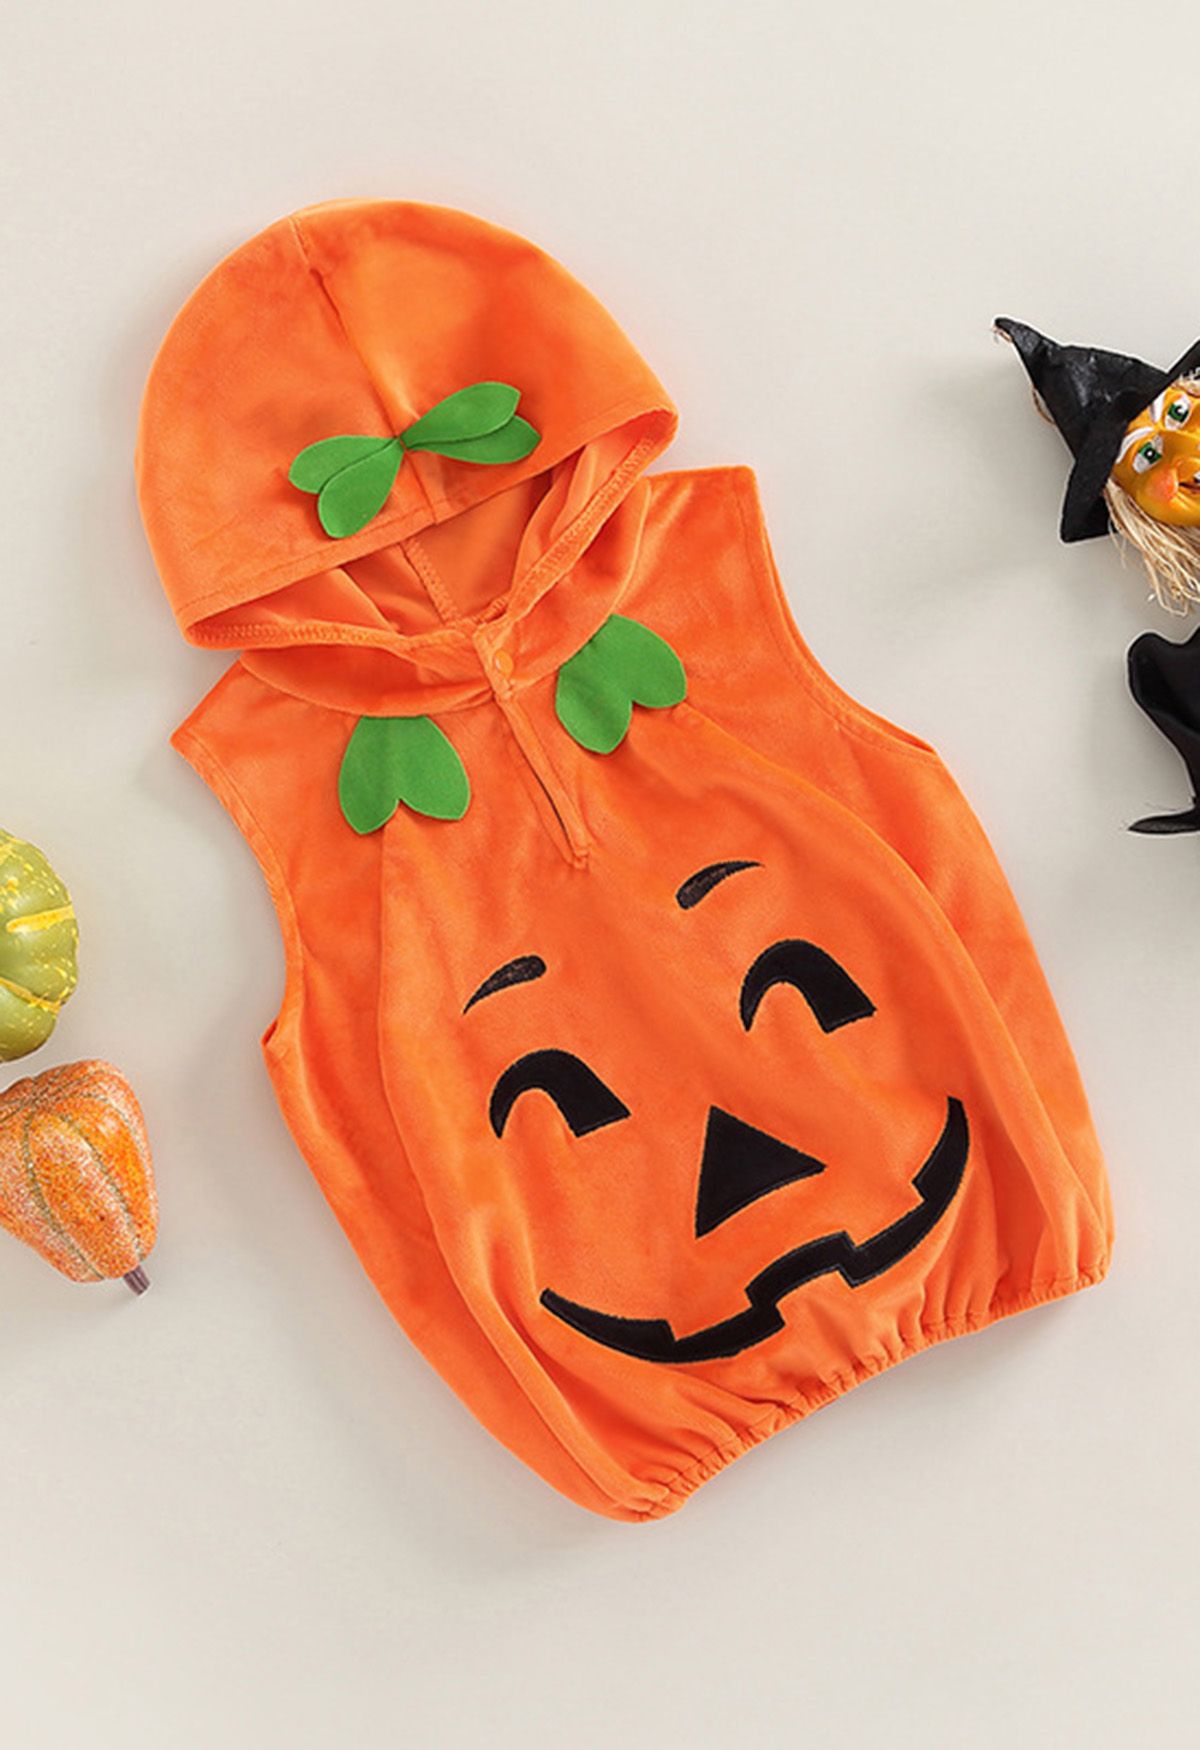 Toddler Baby Pumpkin Hooded Halloween Costume